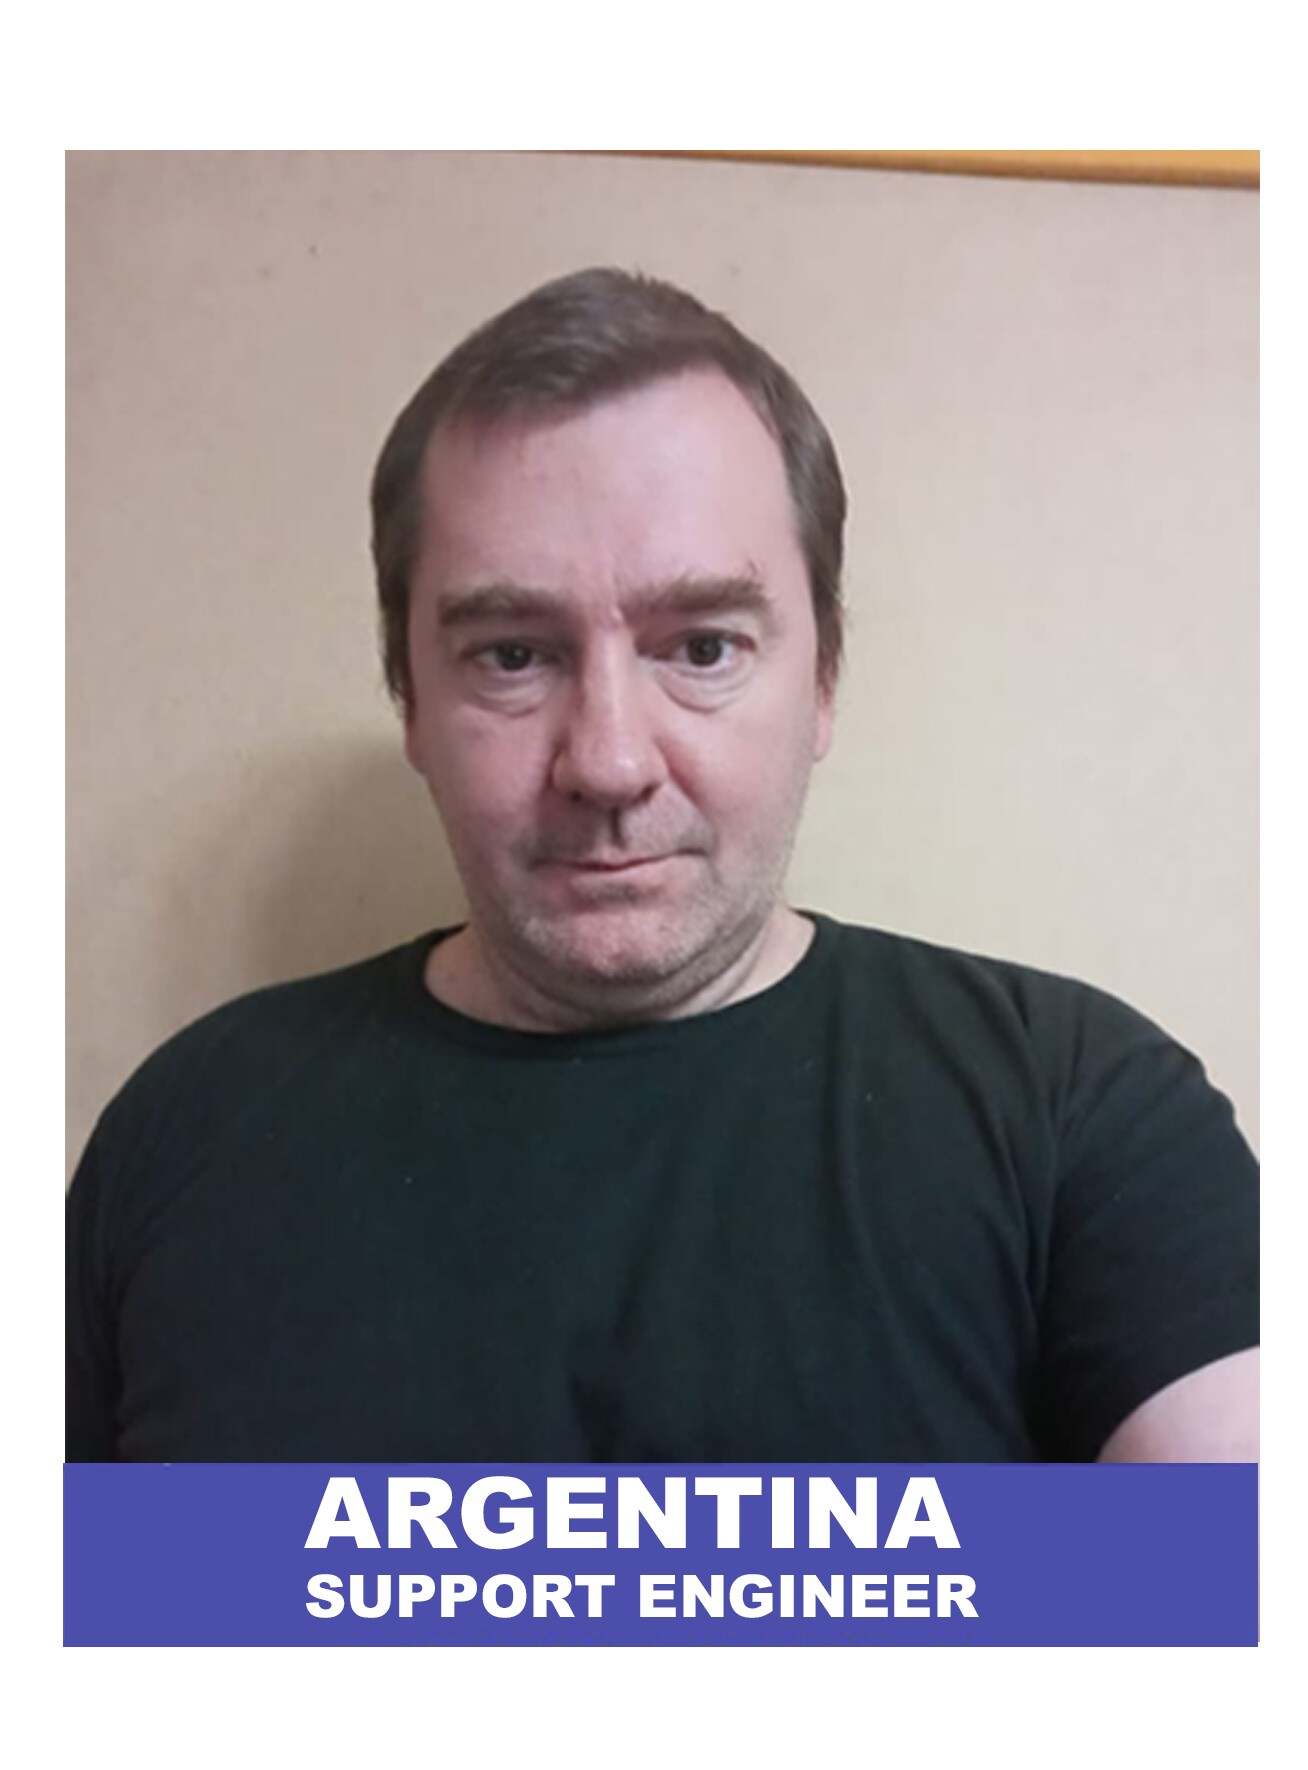 Ingeniero de soporte argentino